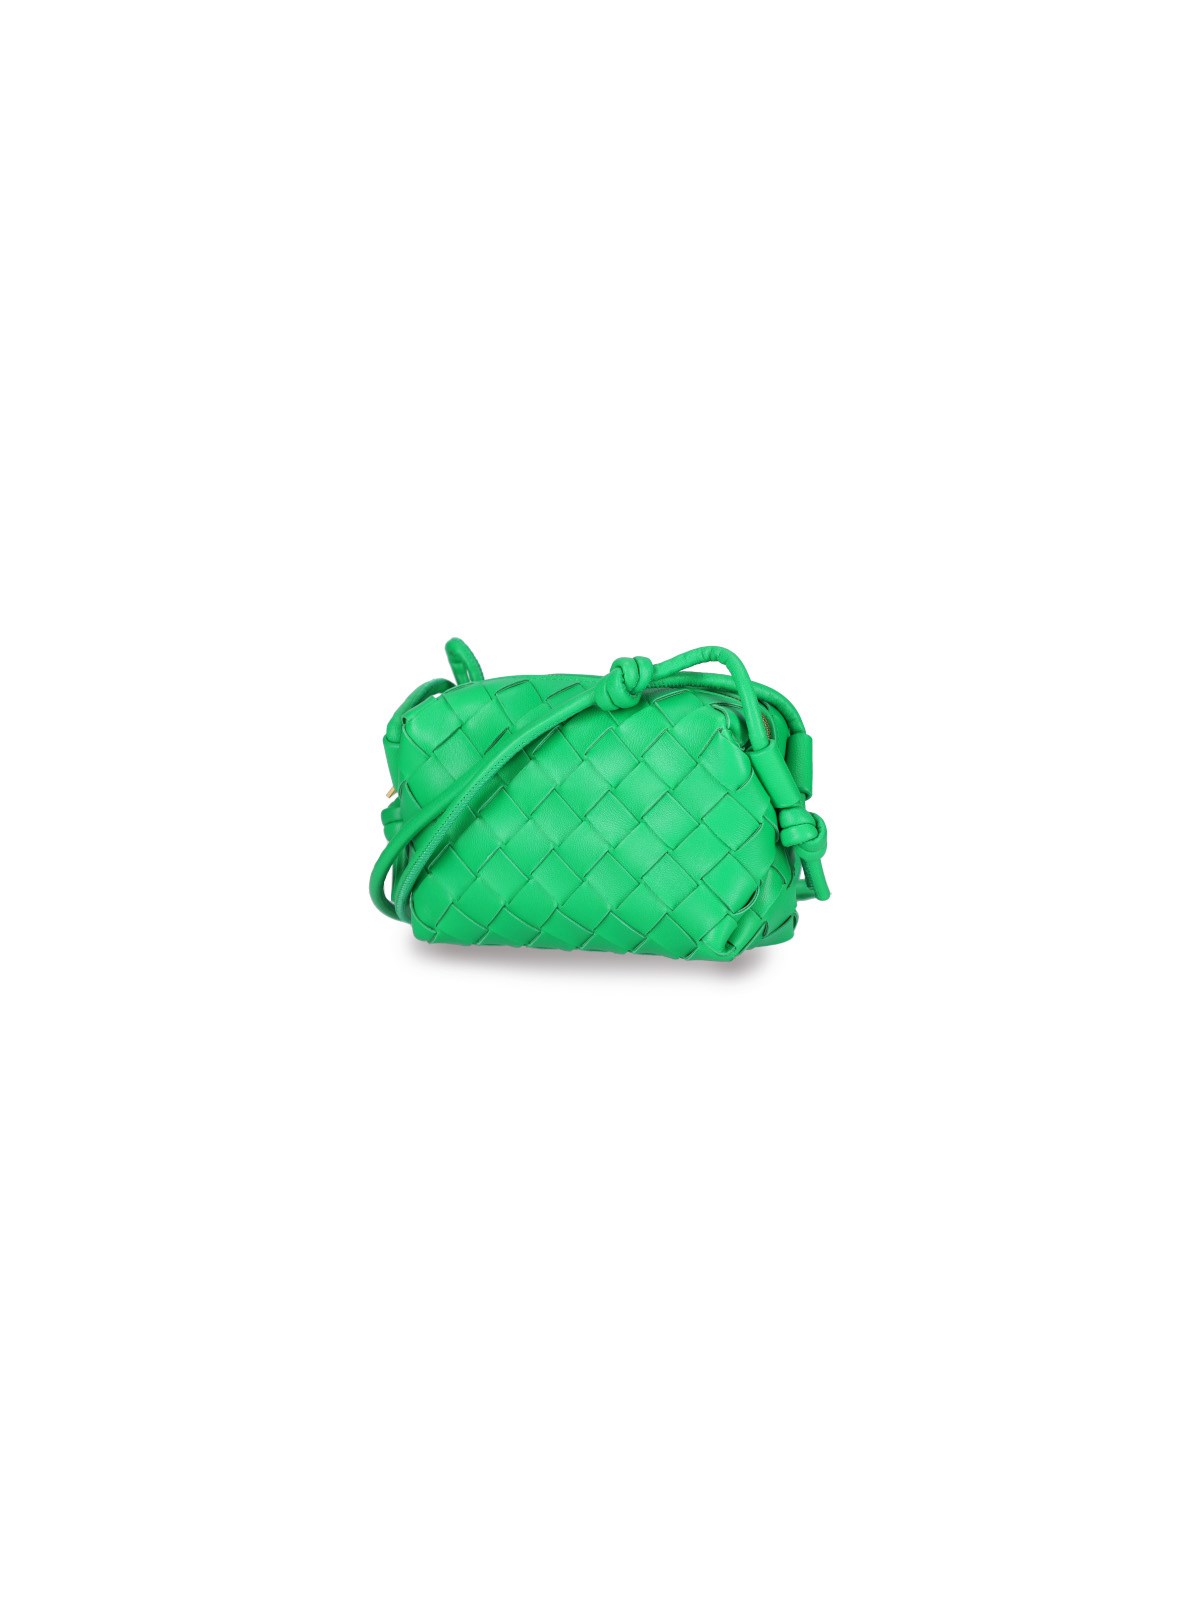 Bottega Veneta Candy Loop camera bag for Women - Green in Bahrain